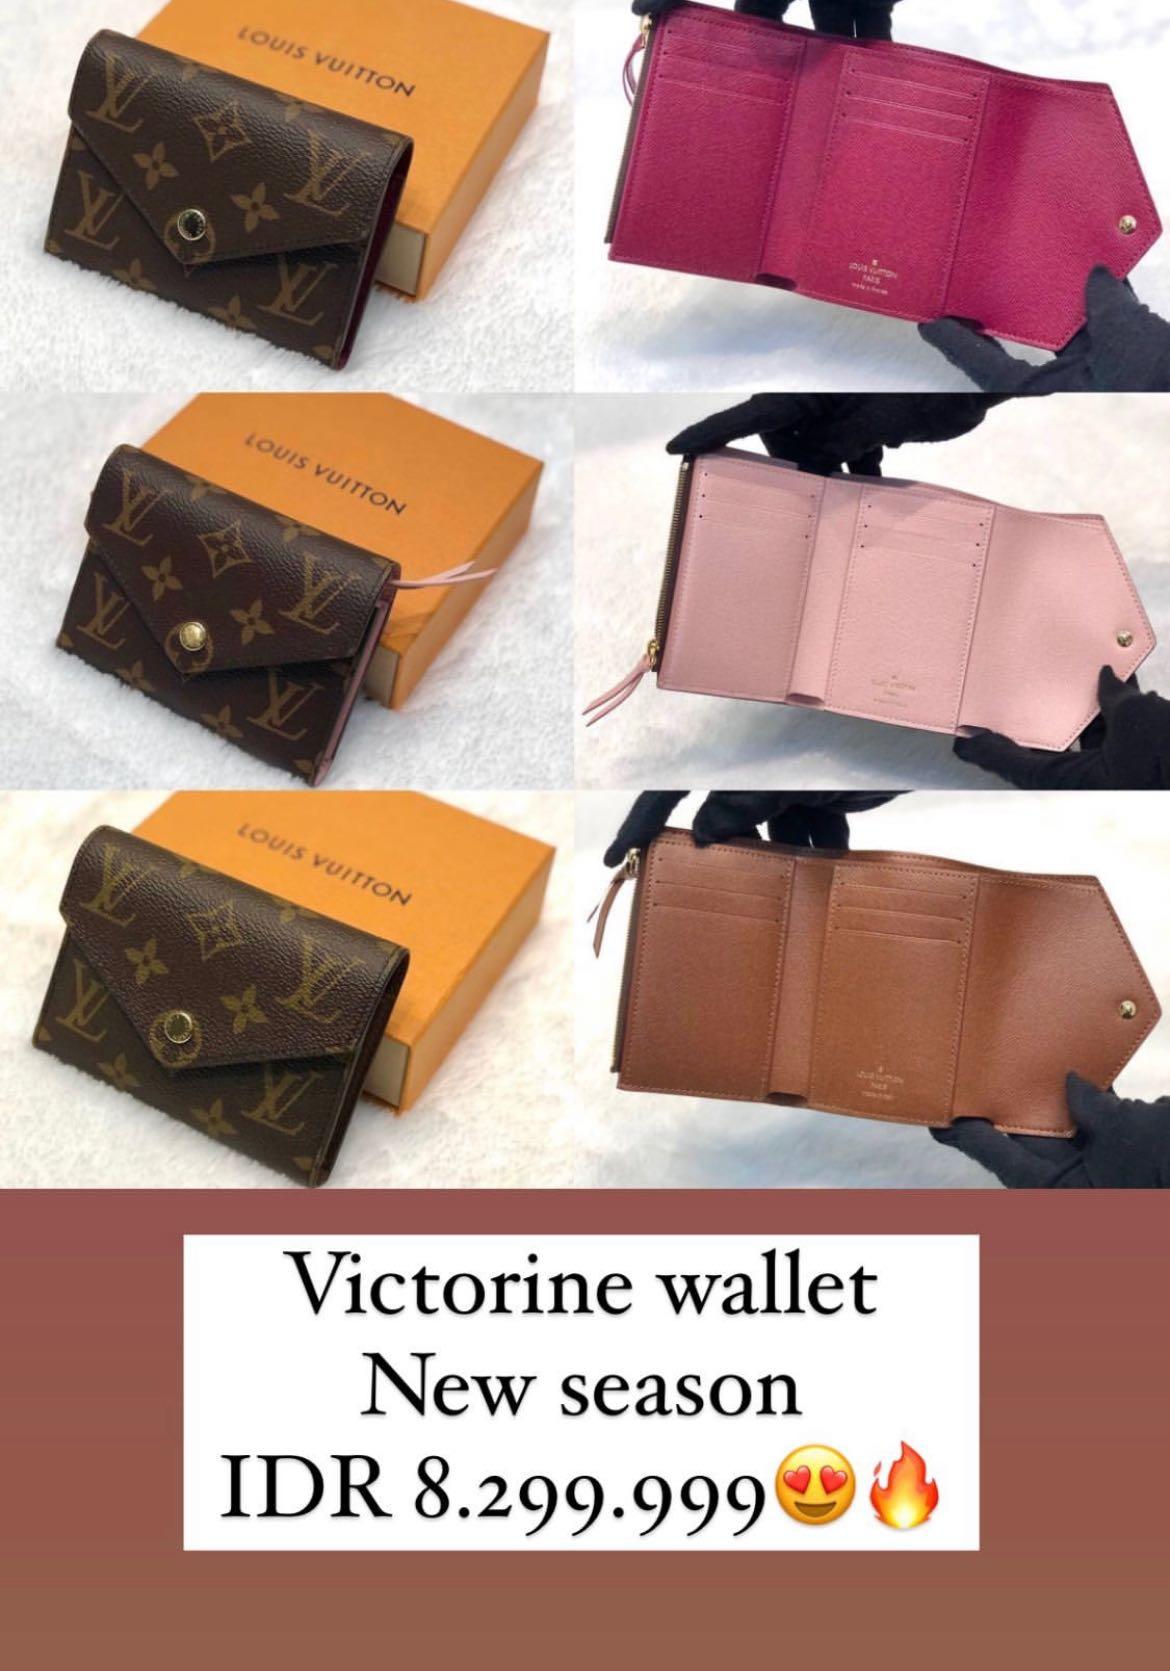 IDR SOLD jt. 2021 Victorine wallet monogram komplit set rec 2021 nett